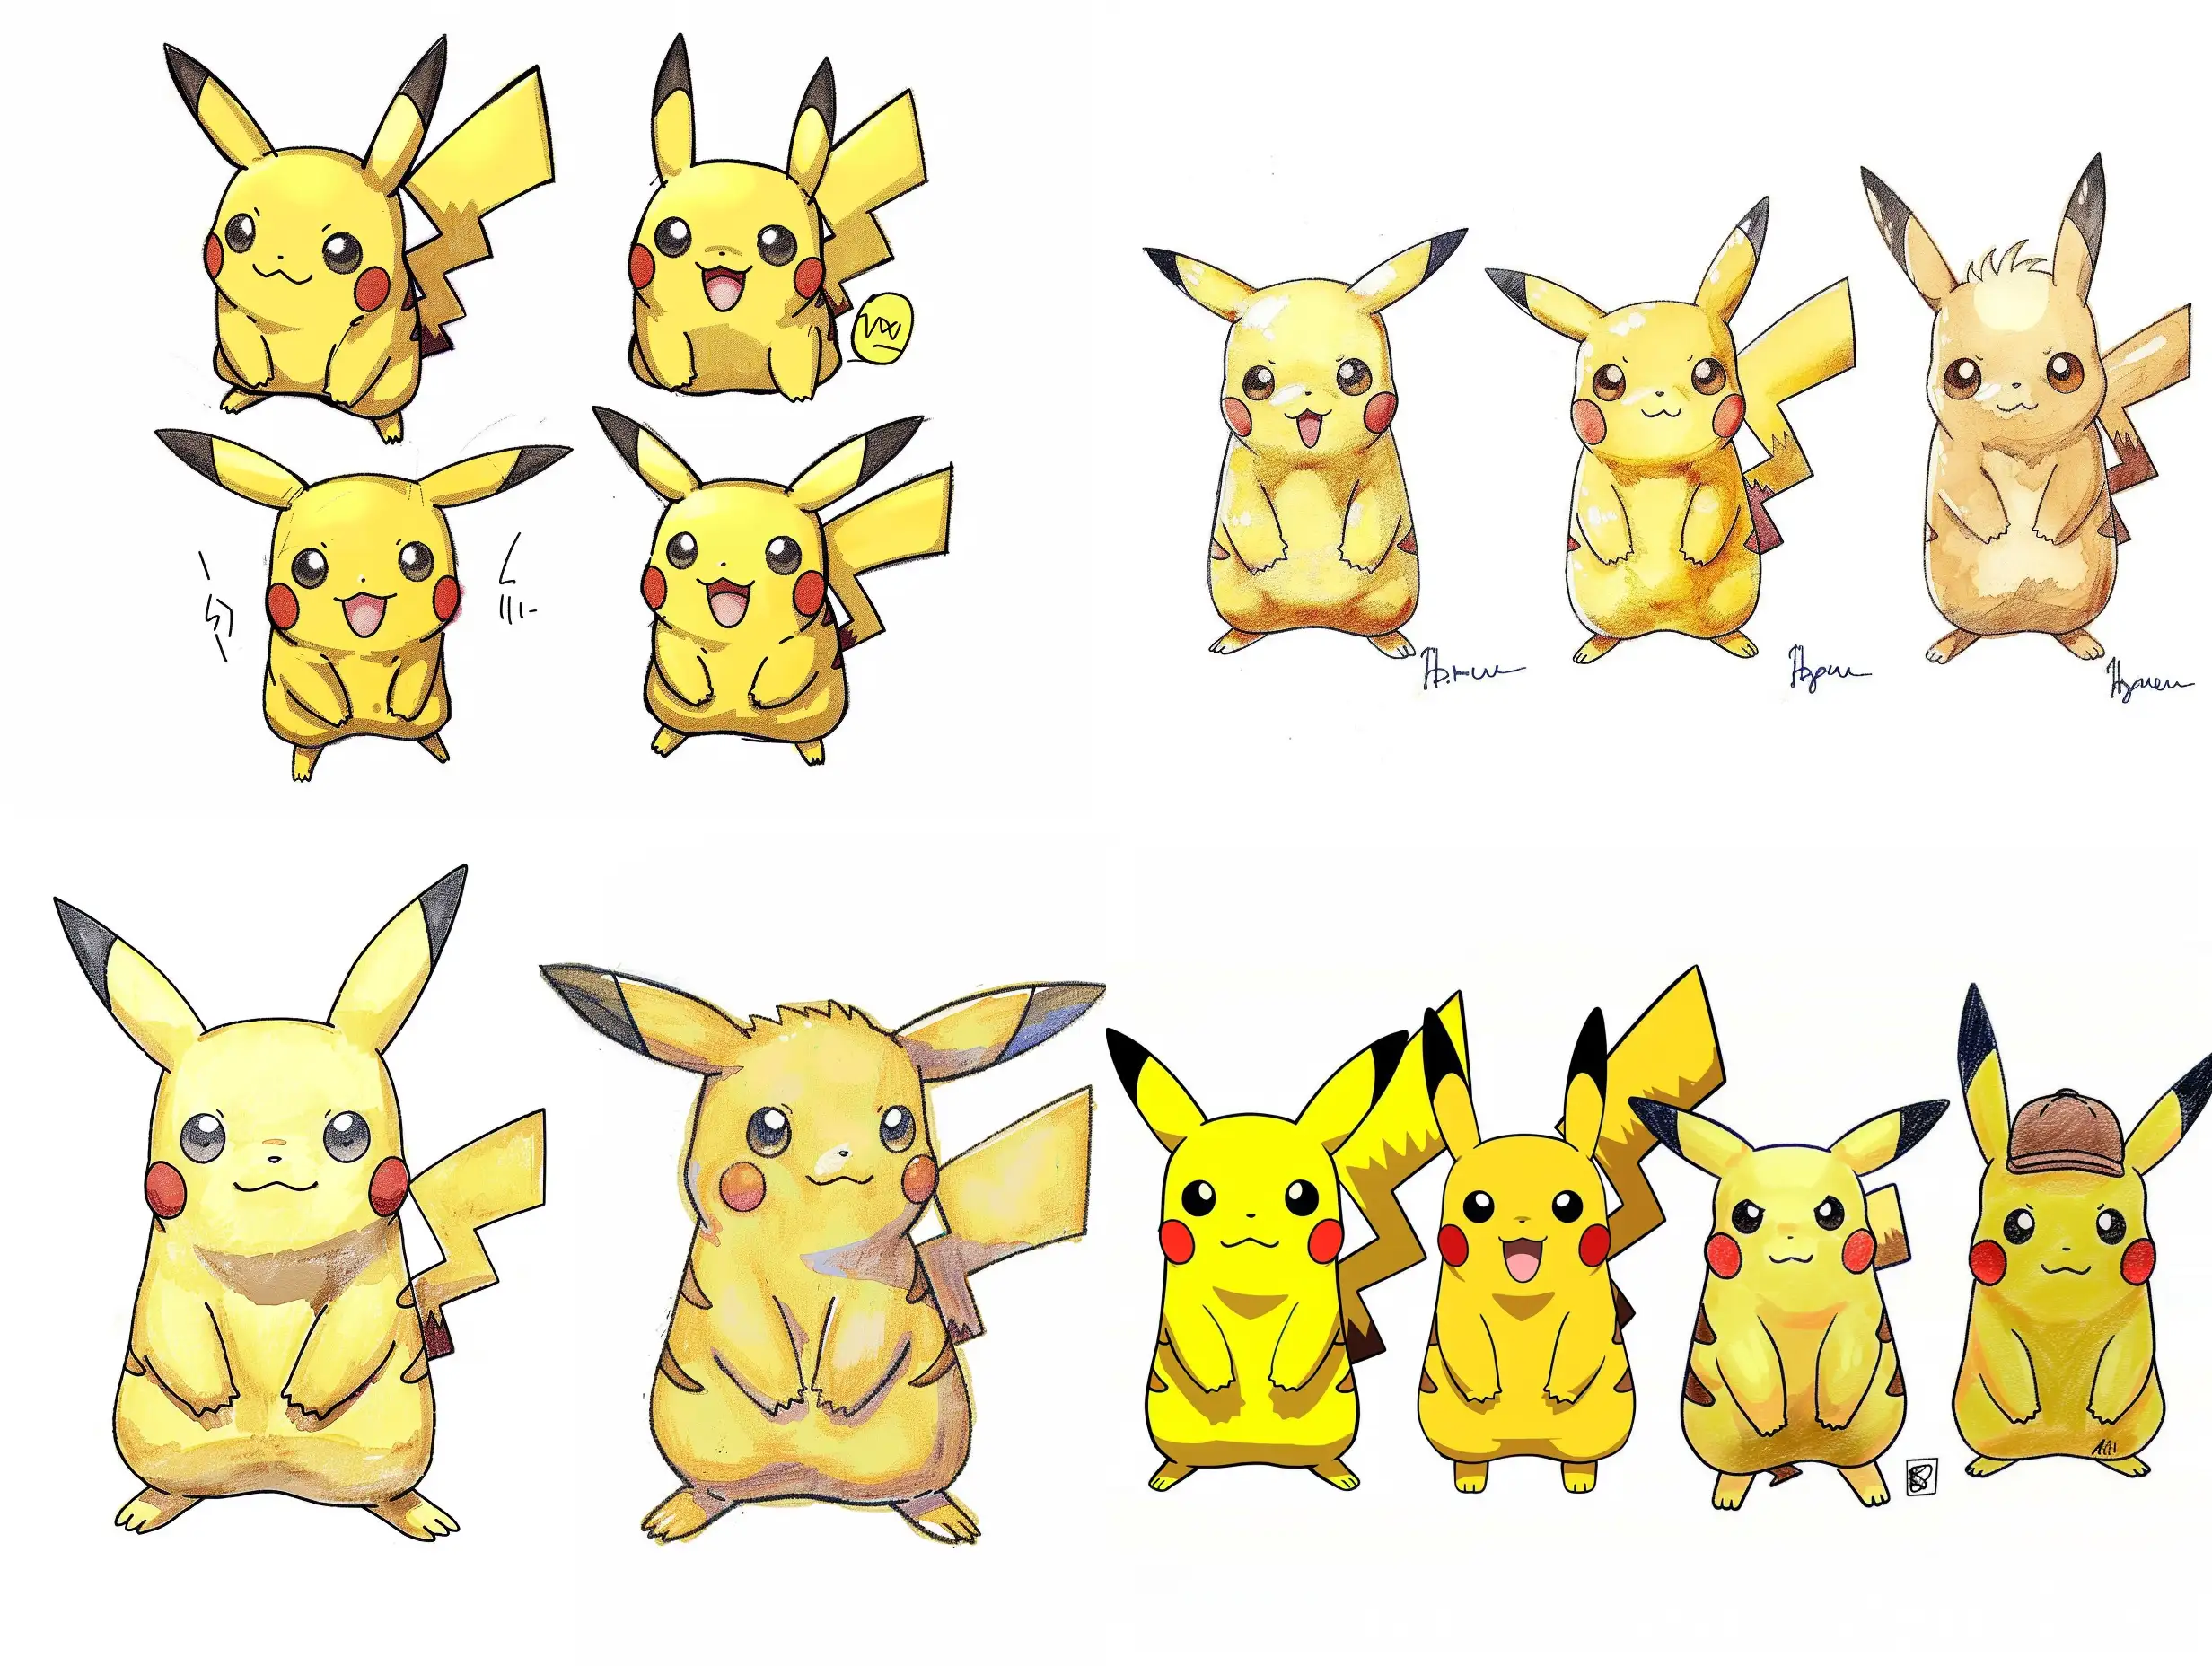 Pikachu-Drawn-in-4-Unique-Styles